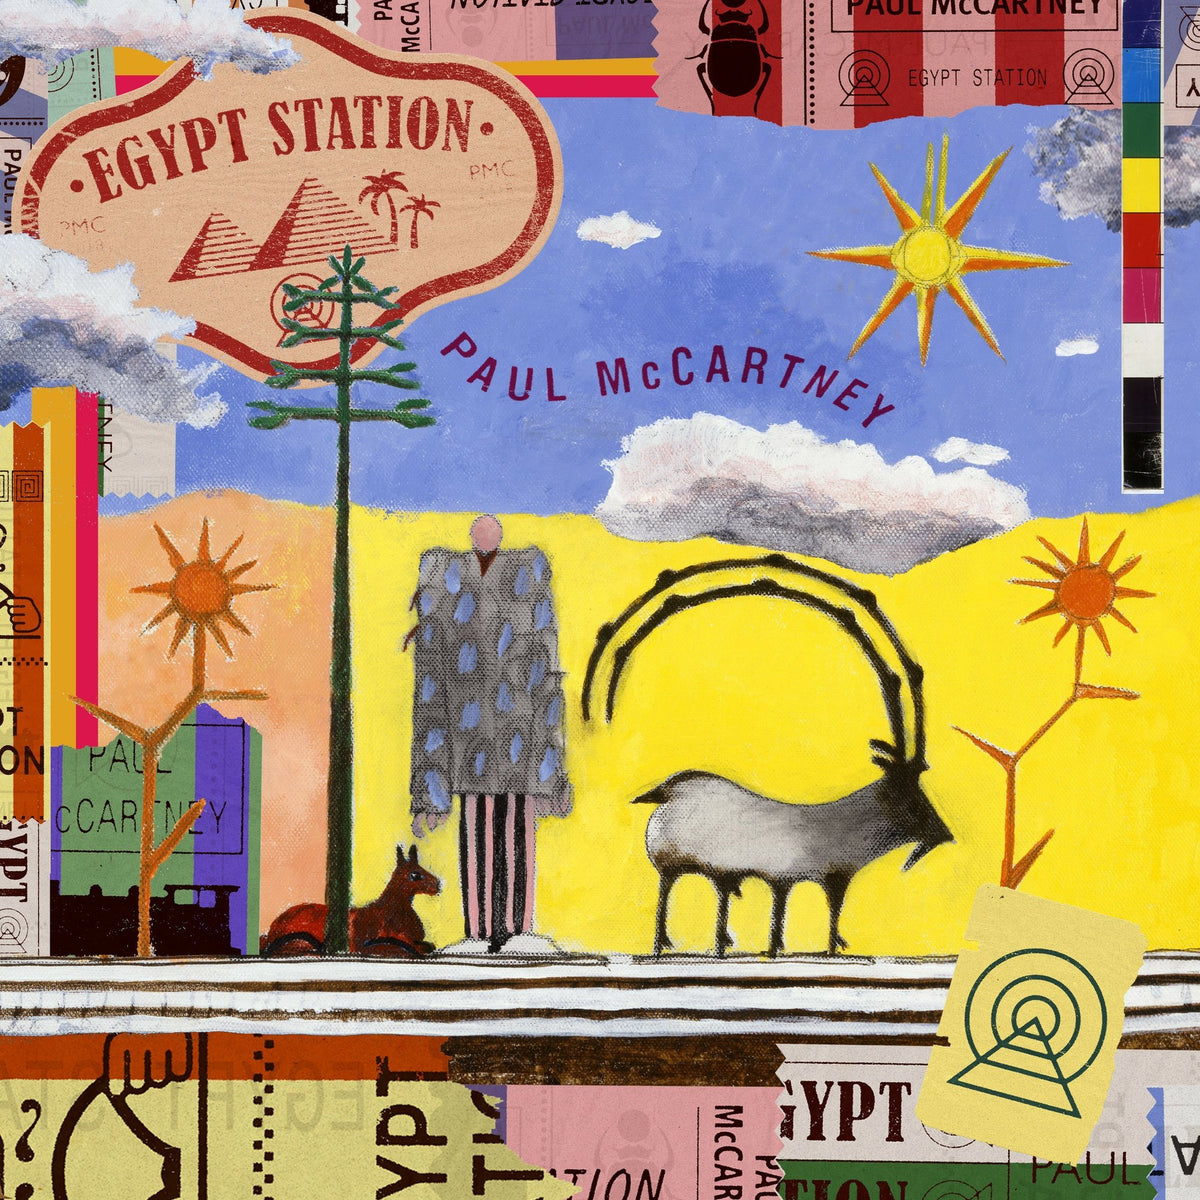 Paul McCartney - Egypt Station (Ltd. Edition)